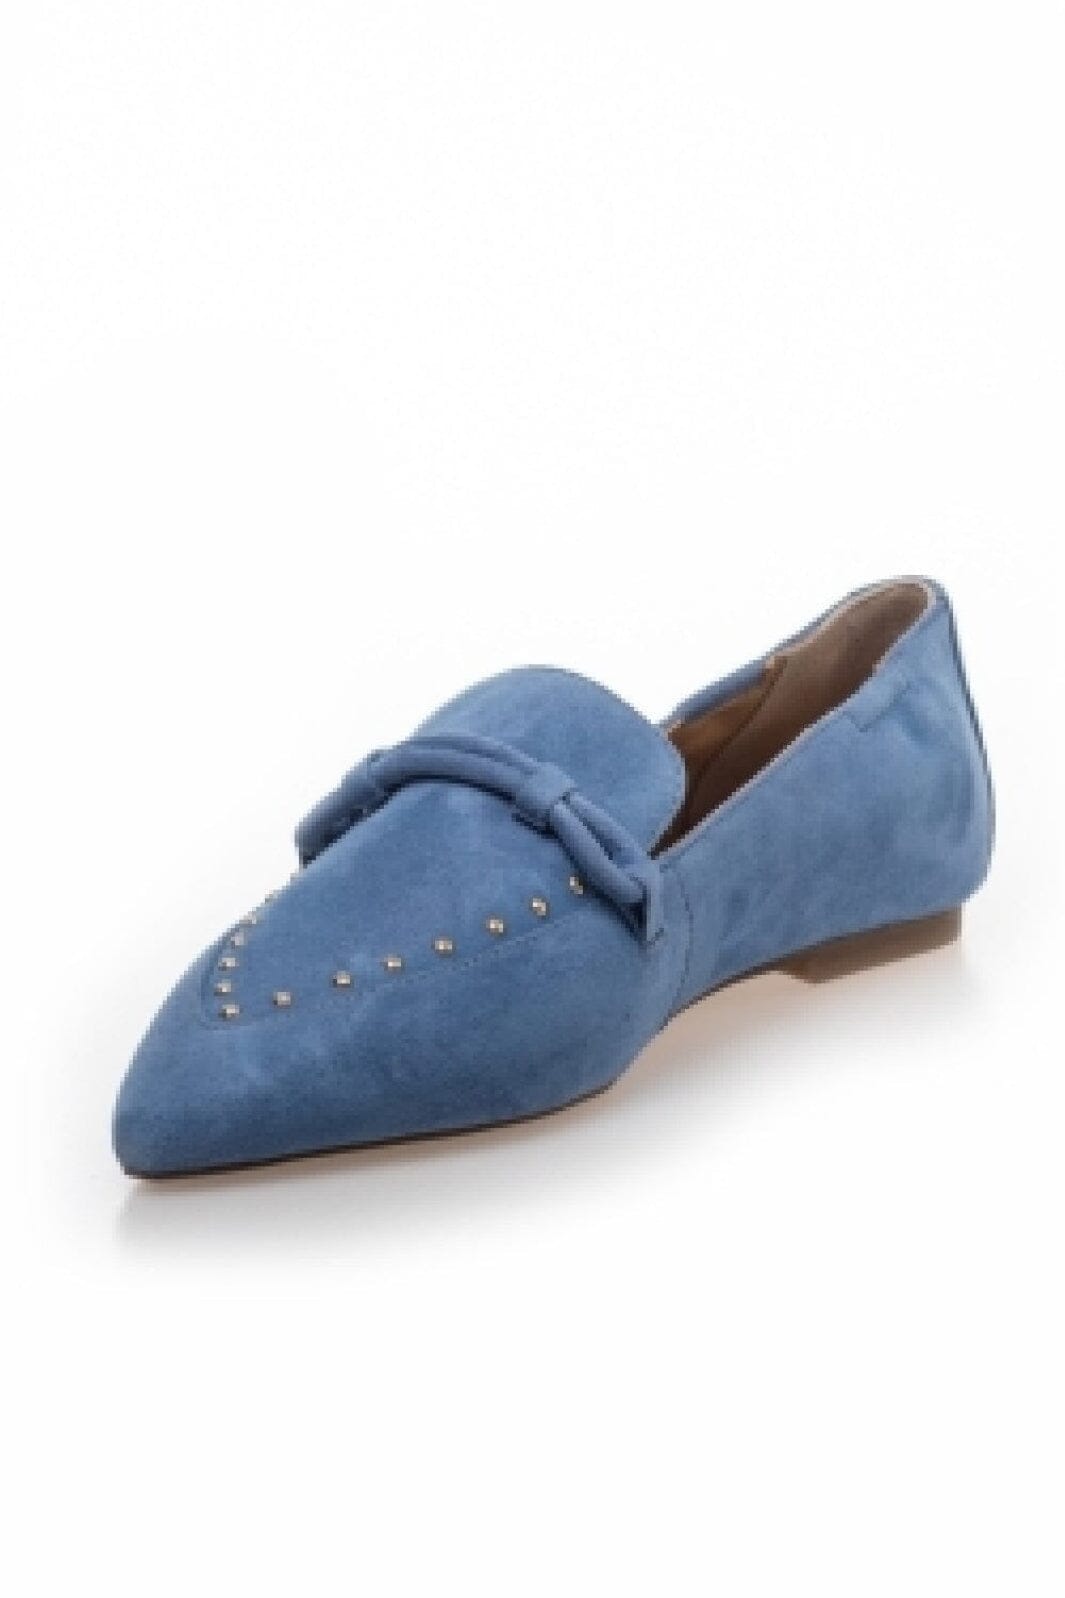 Copenhagen Shoes - Be You - Suede - 0220 Denim Loafers 